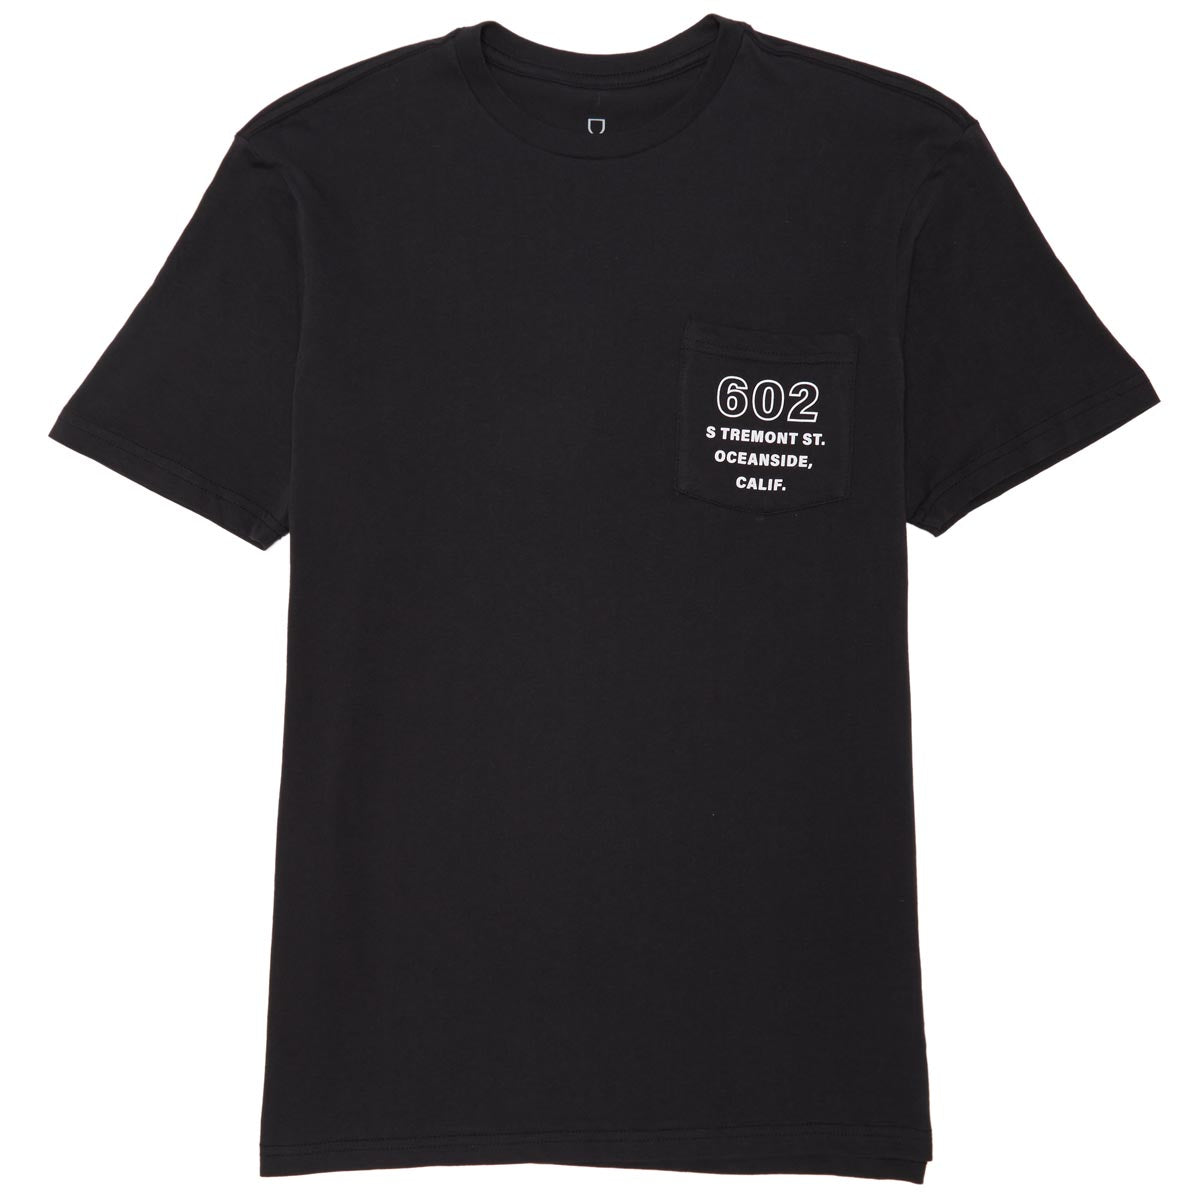 Brixton Haven Pocket T-Shirt - Black image 2